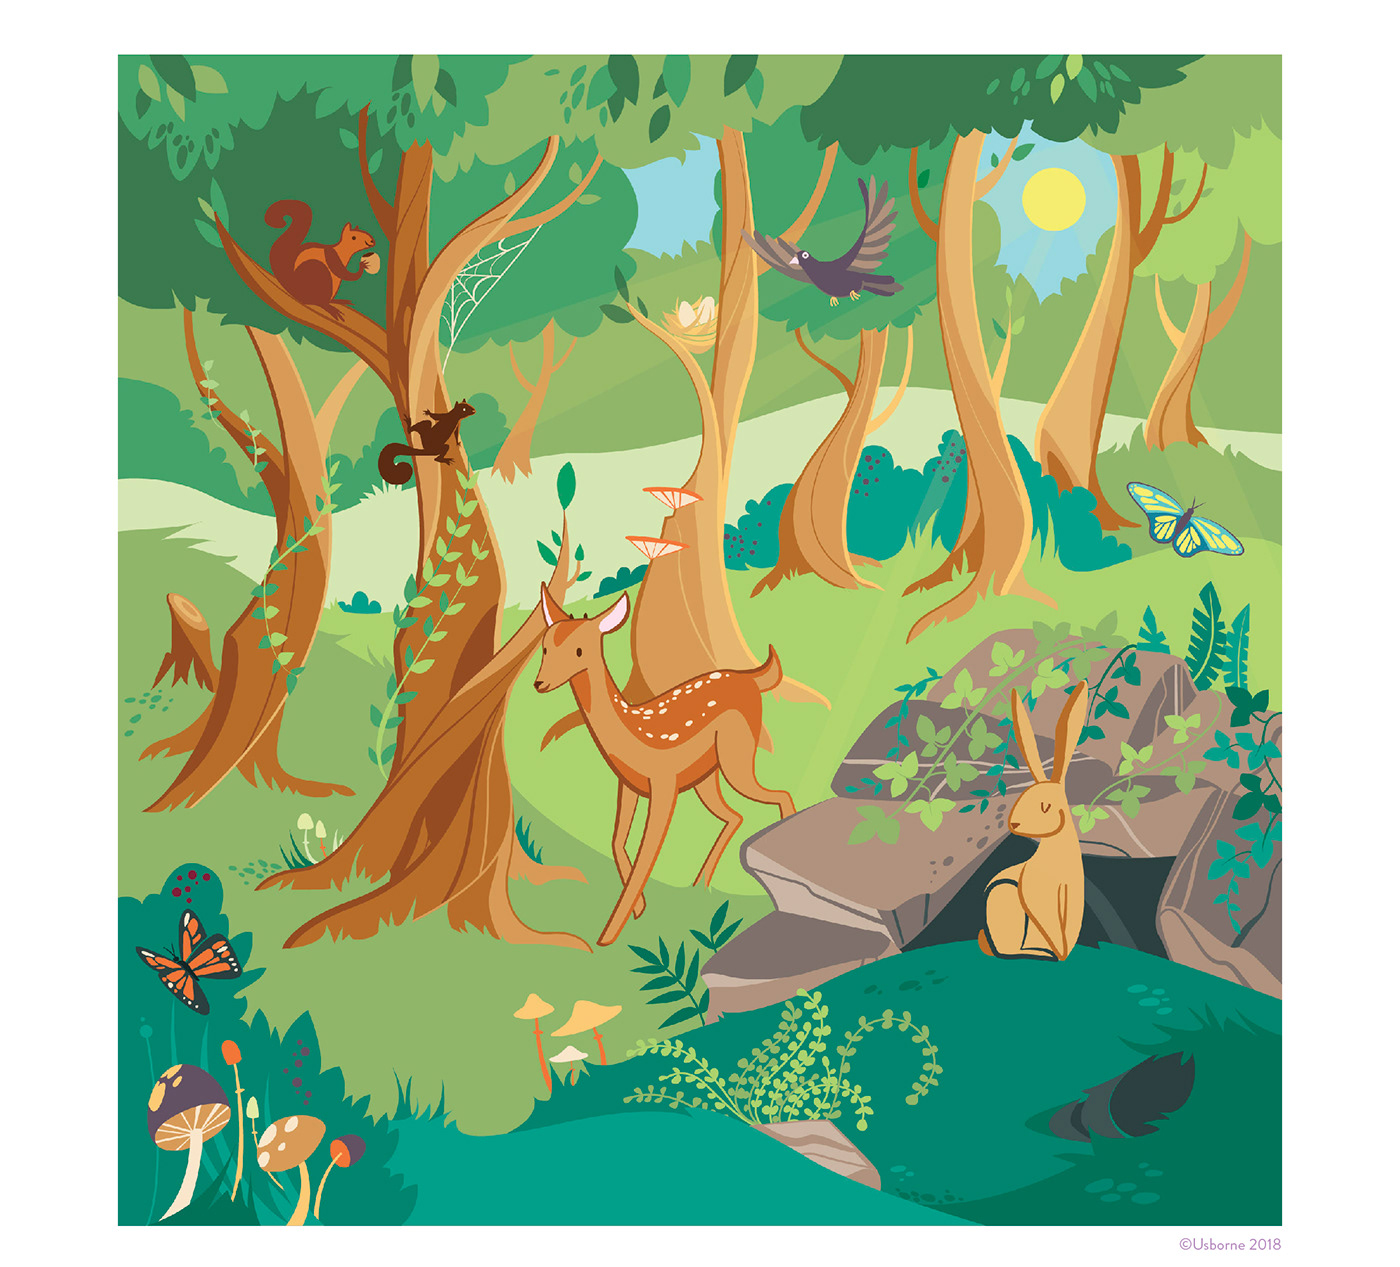 Nature Games activity book illustrazione flat design children illustration usborne animals wood